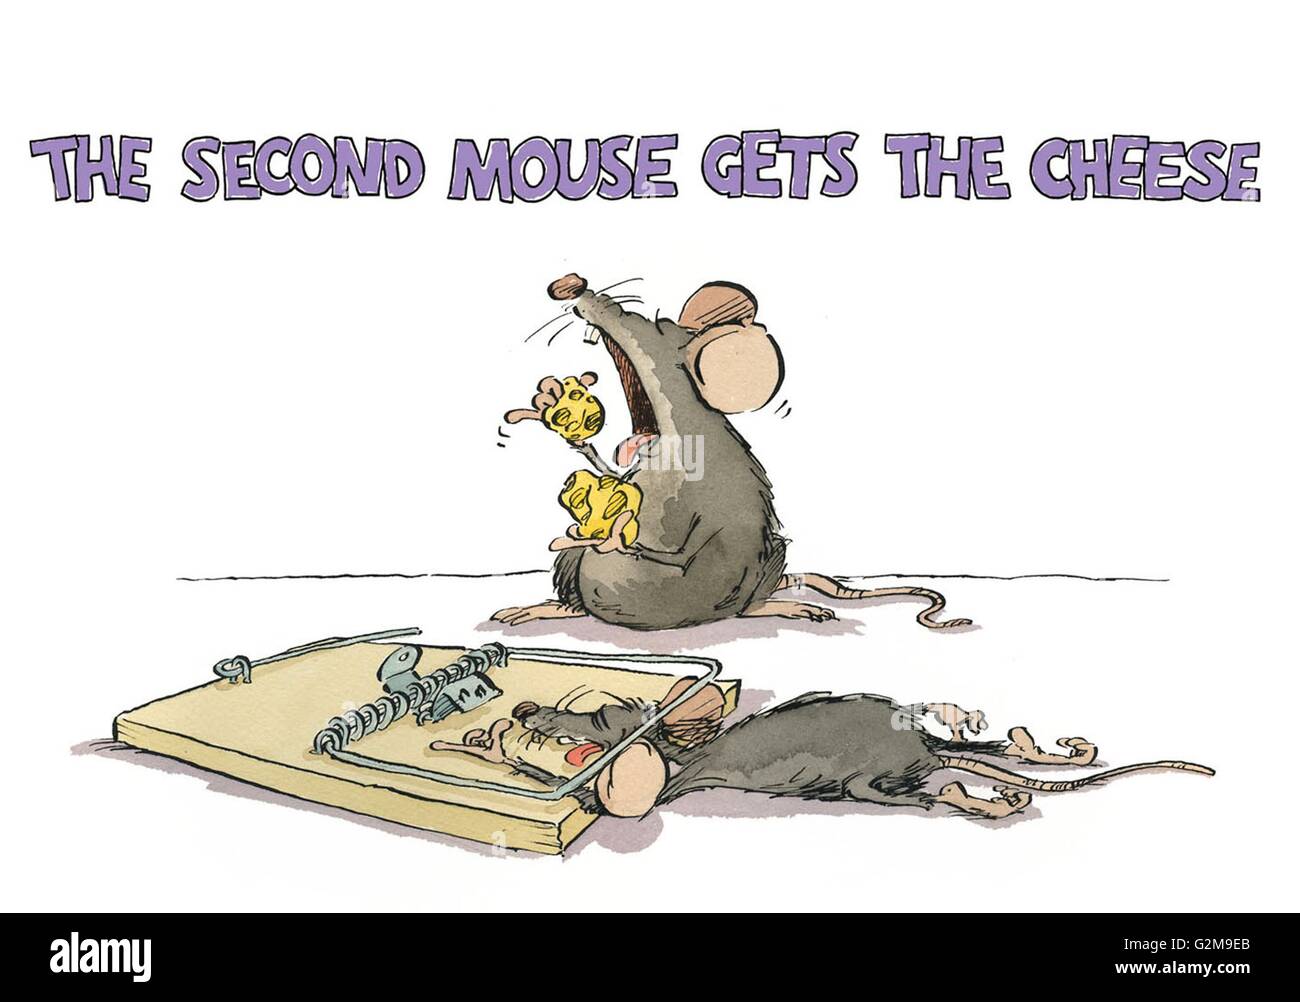 raton-comiendo-queso-con-raton-muerto-en-trampa-en-primer-plano-g2m9eb.jpg